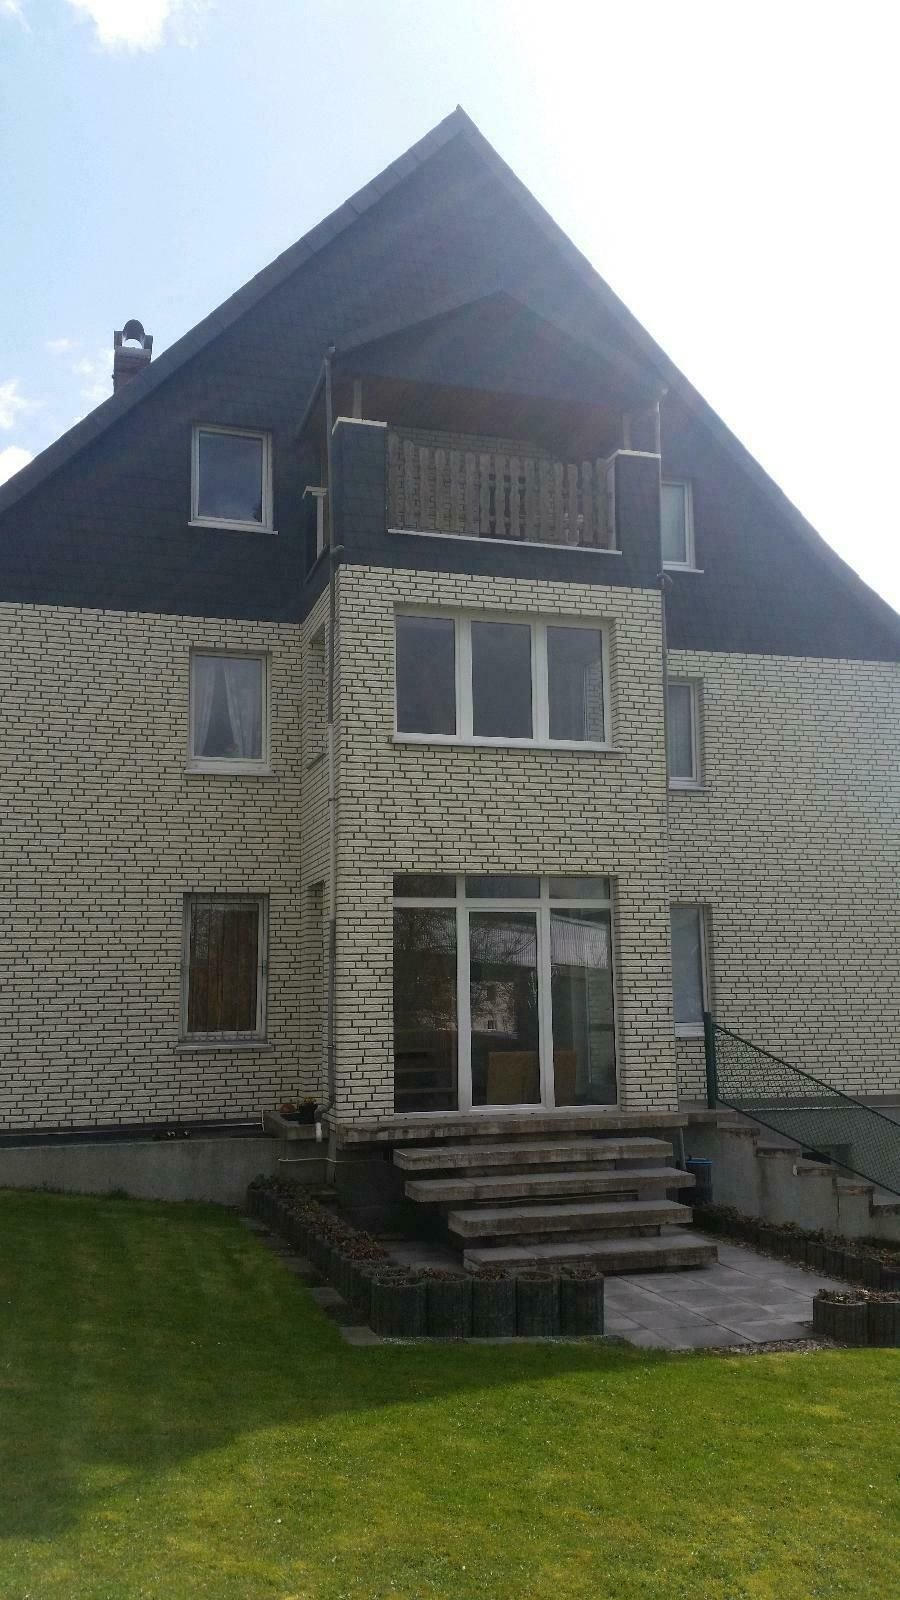 Eschershausen, 3 Familienhaus